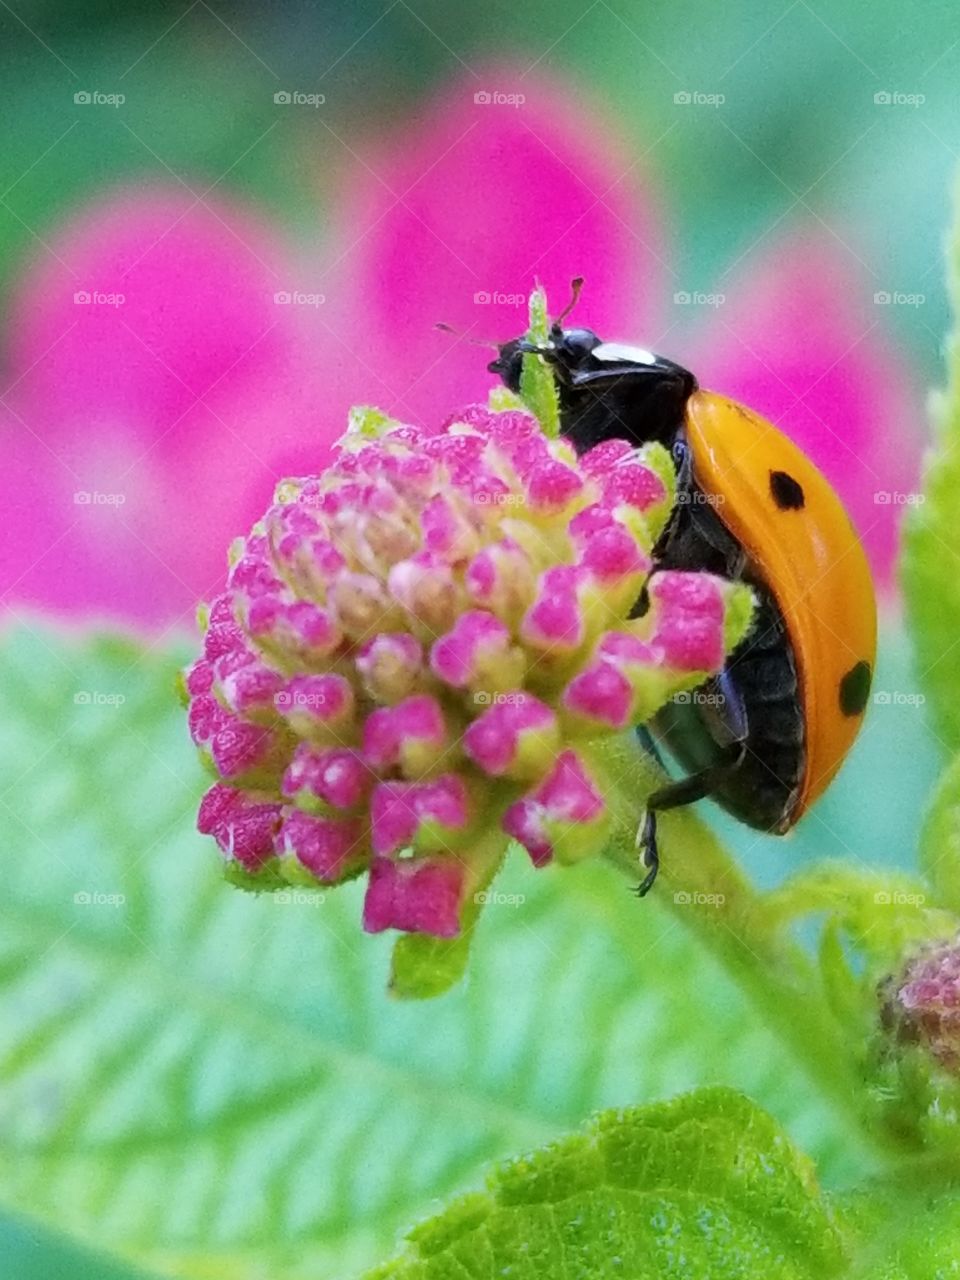 Ladybug on Flower Buds